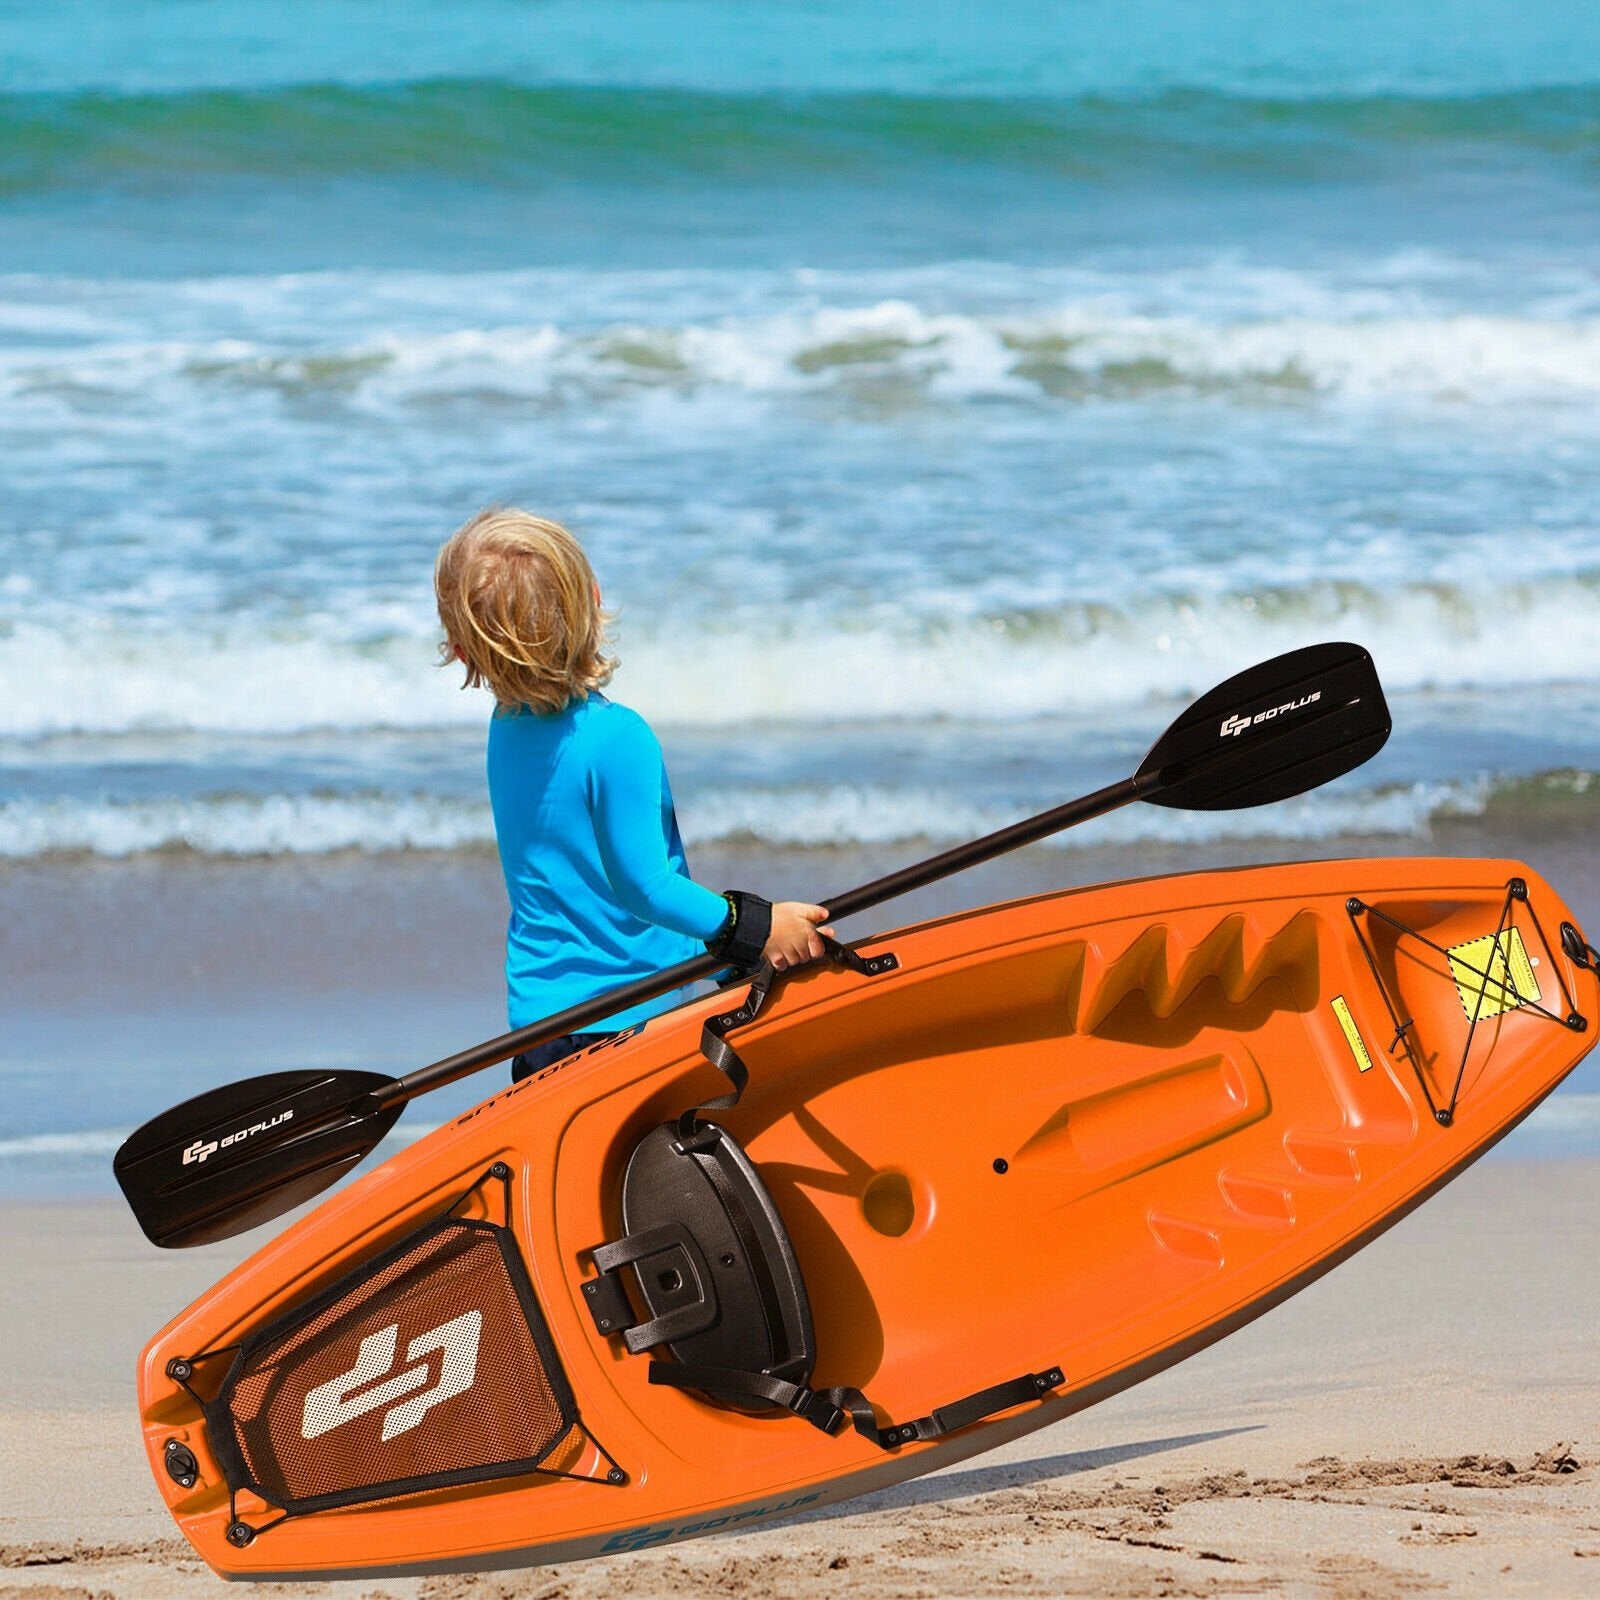 6 Feet Youth Kids Kayak with Bonus Paddle and Folding Backrest for Kid Over 5, Orange - Gallery Canada